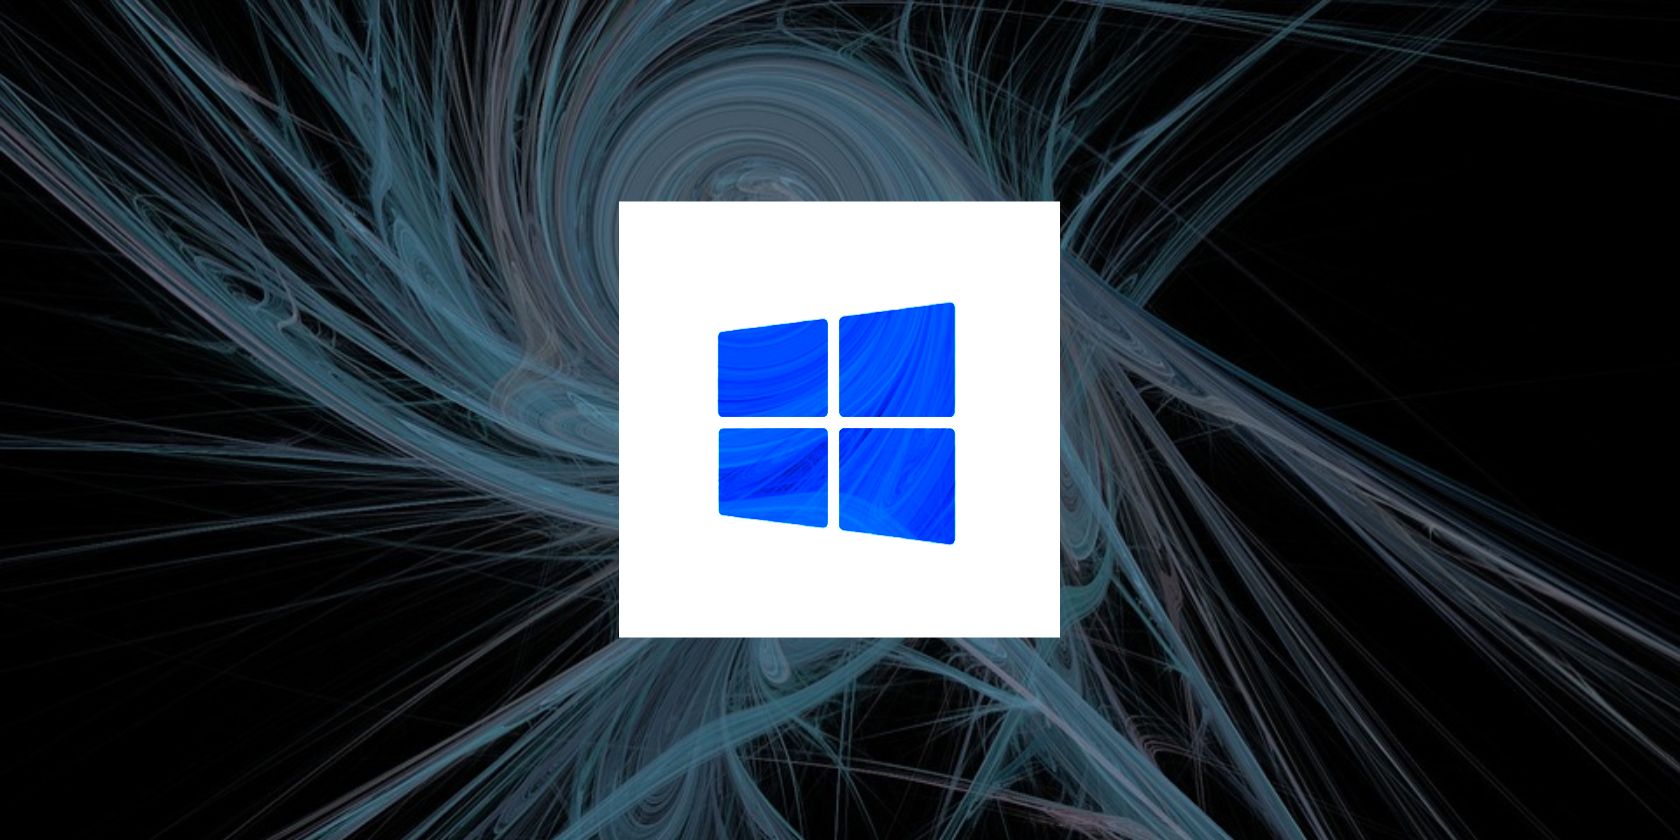 the windows logo over a screensaver-like background